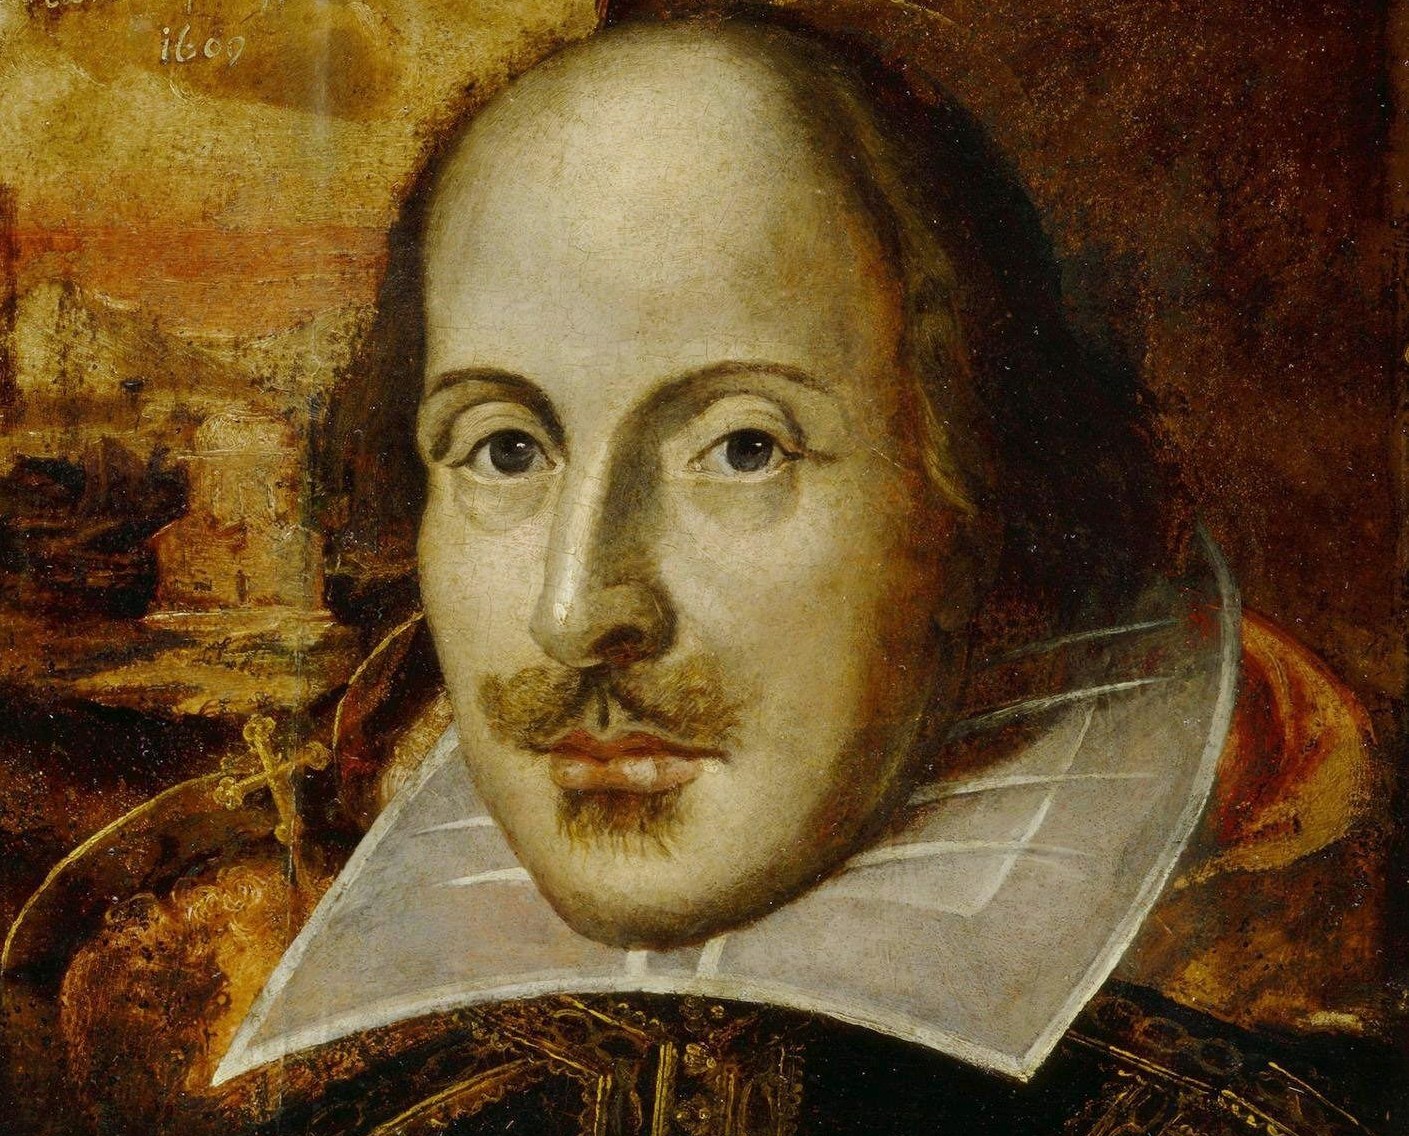 William Shakespeare, inventore di parole